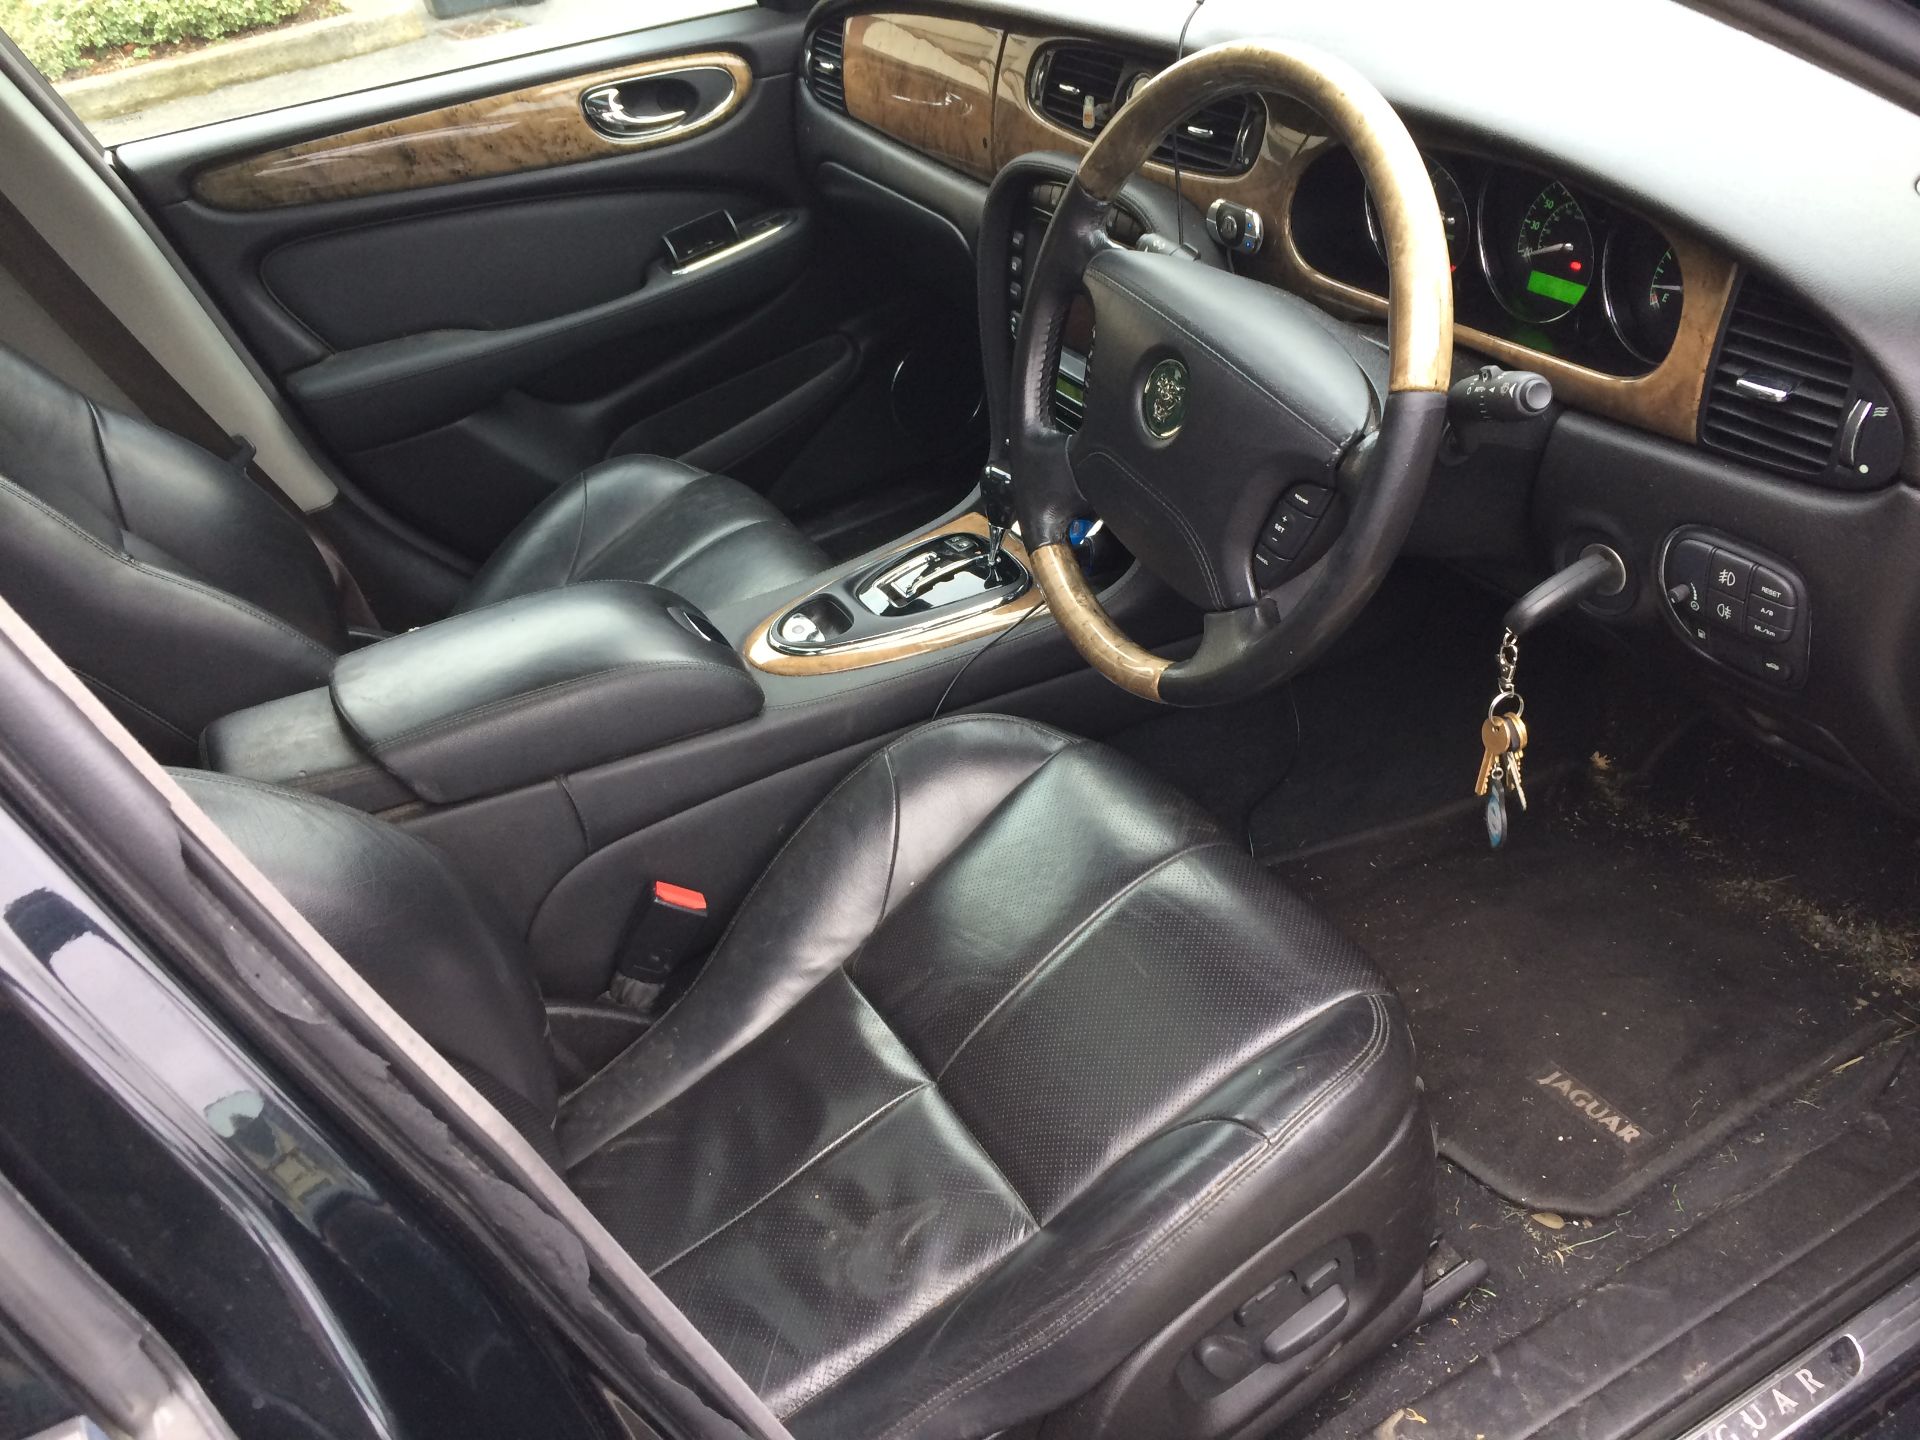 03CW2805 Jaguar XJ6 Sport - Image 6 of 21